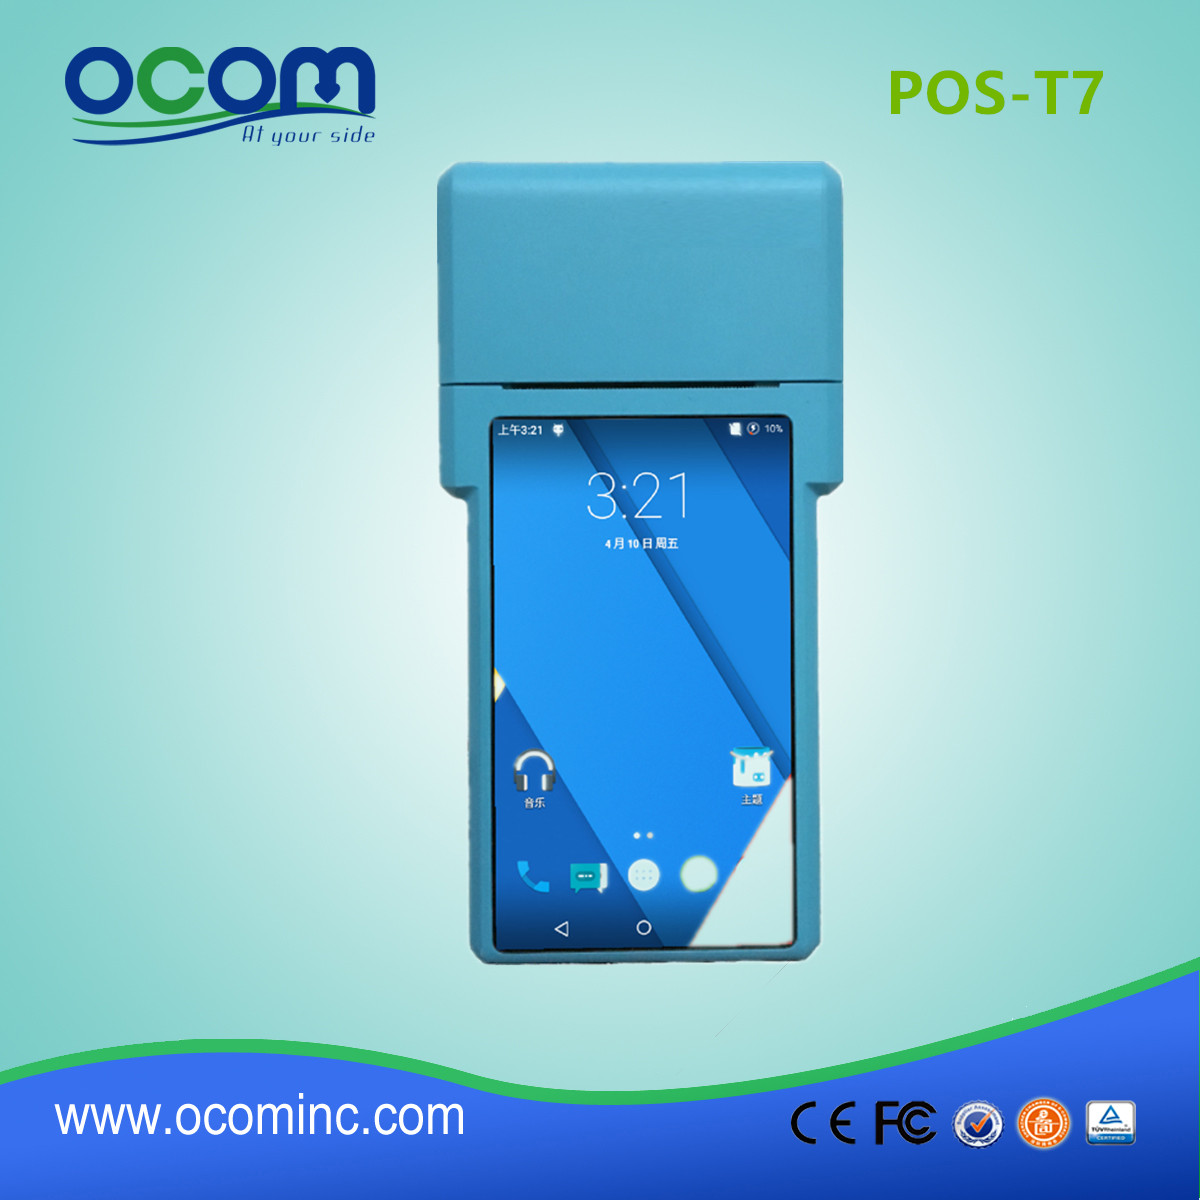 (POS-T7) La fábrica de China hizo la pantalla táctil de la alta calidad móvil por el dispositivo del top-up pos